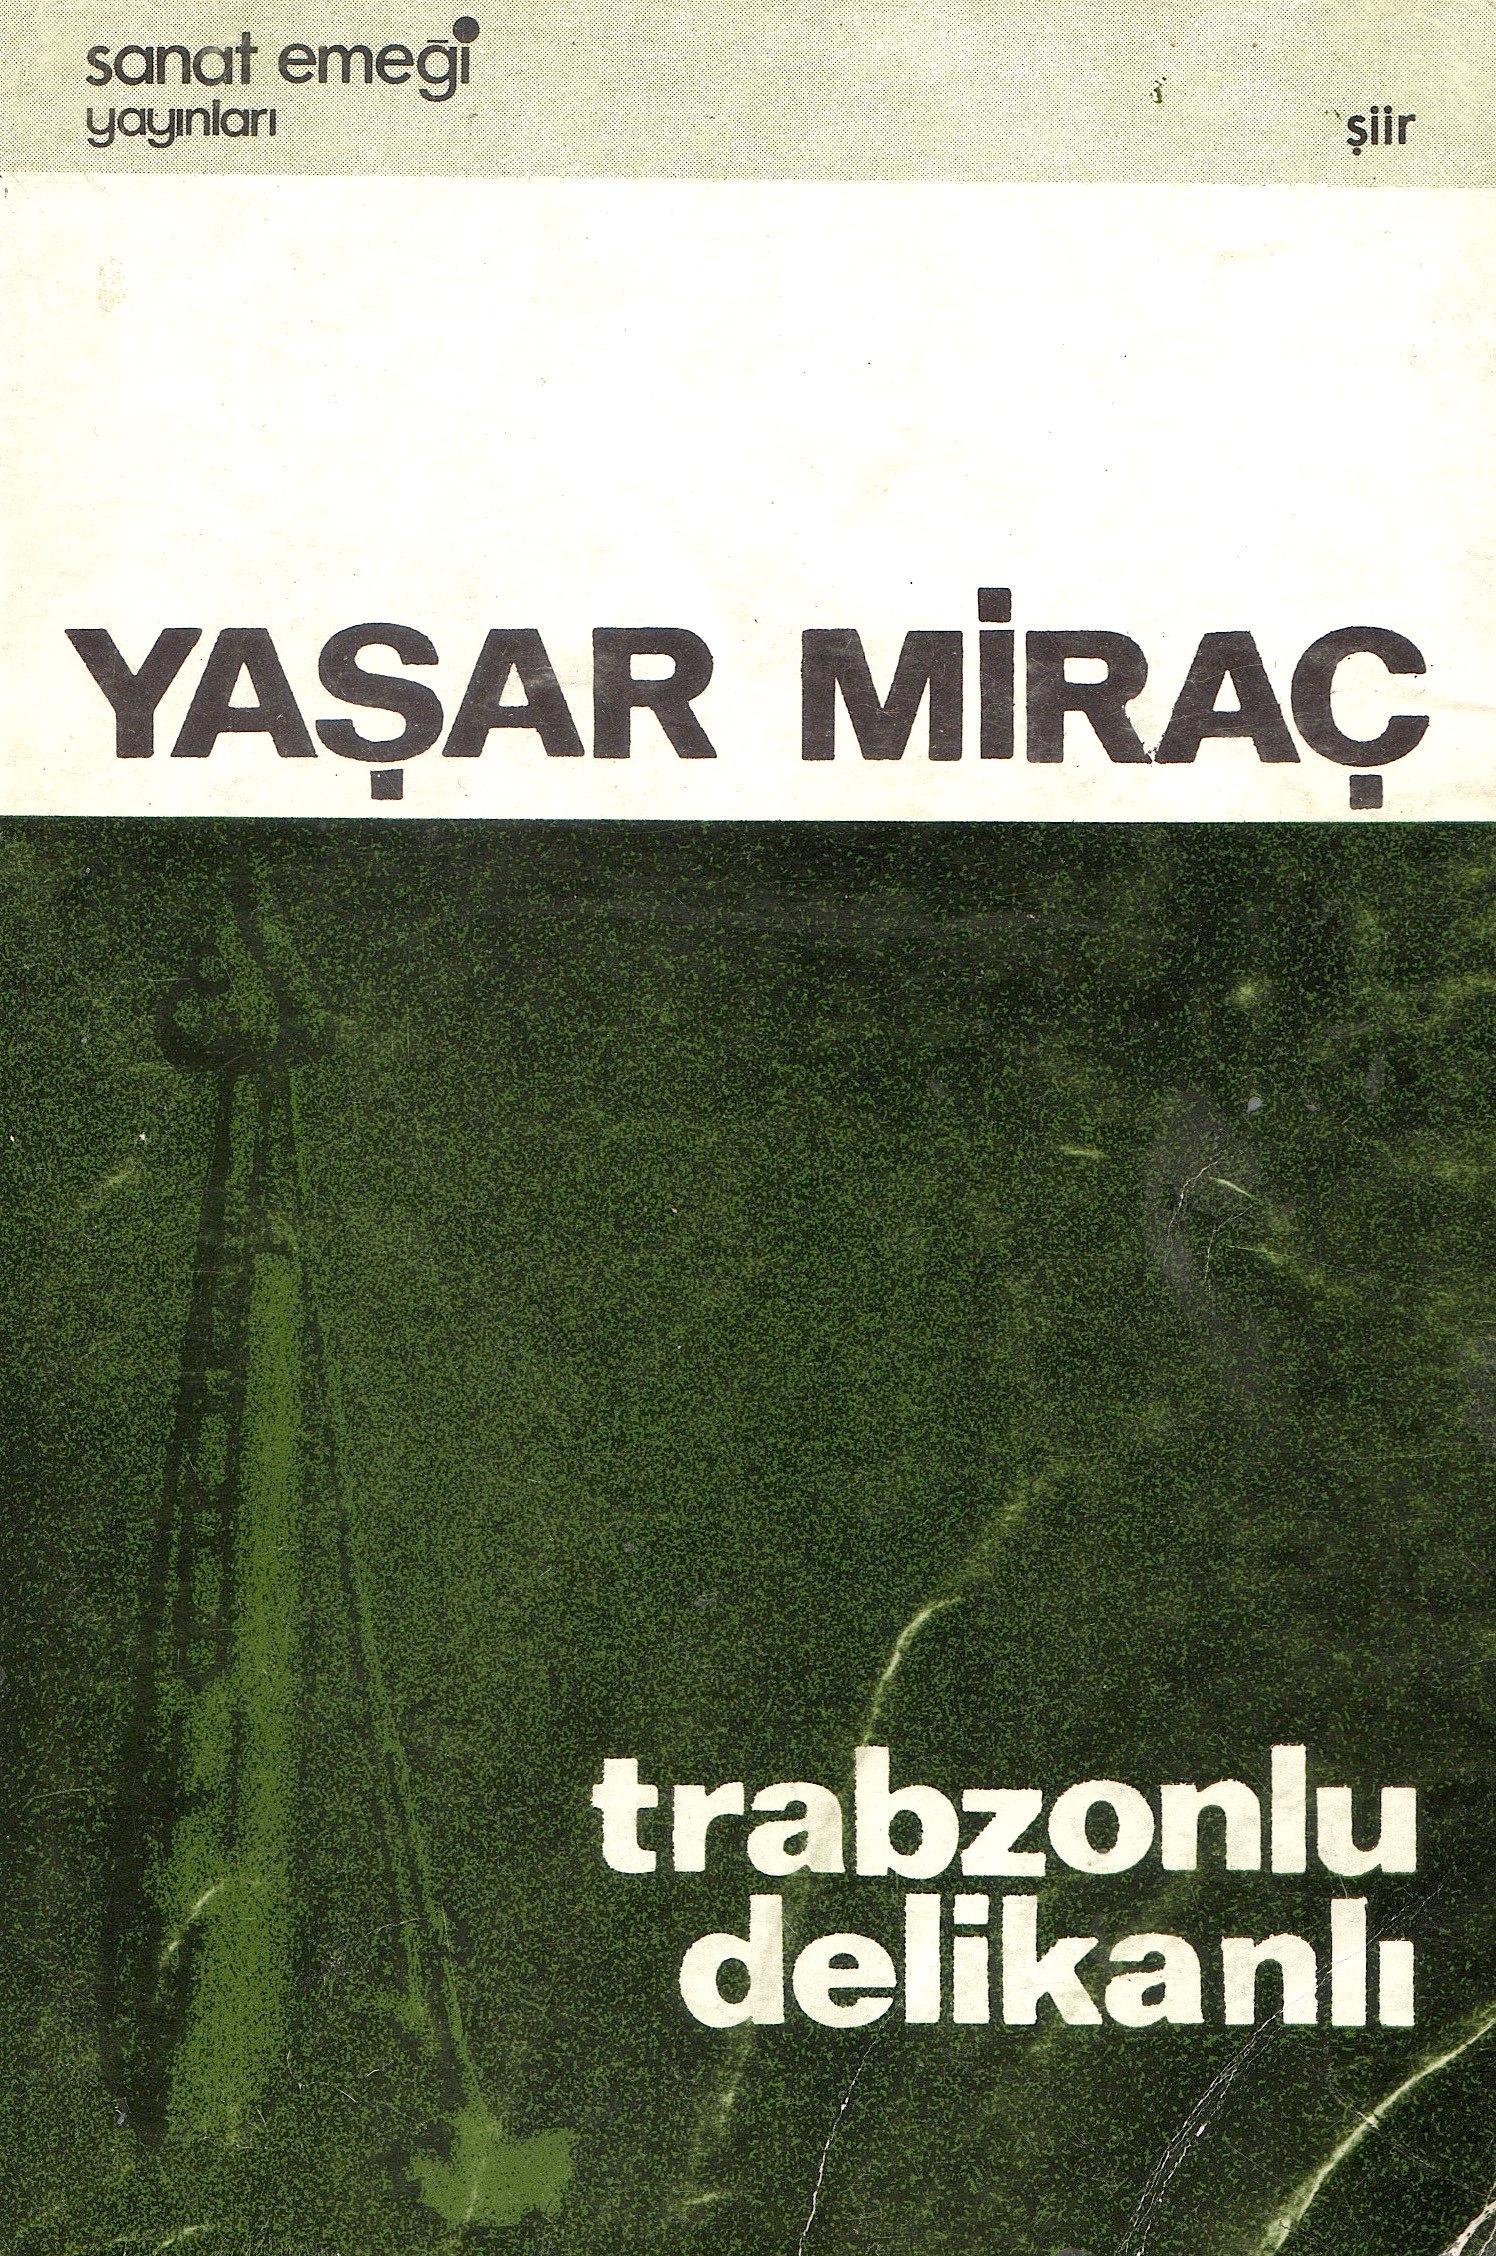 9. Trabzonlu Delikanli İst. 1979 141 s.